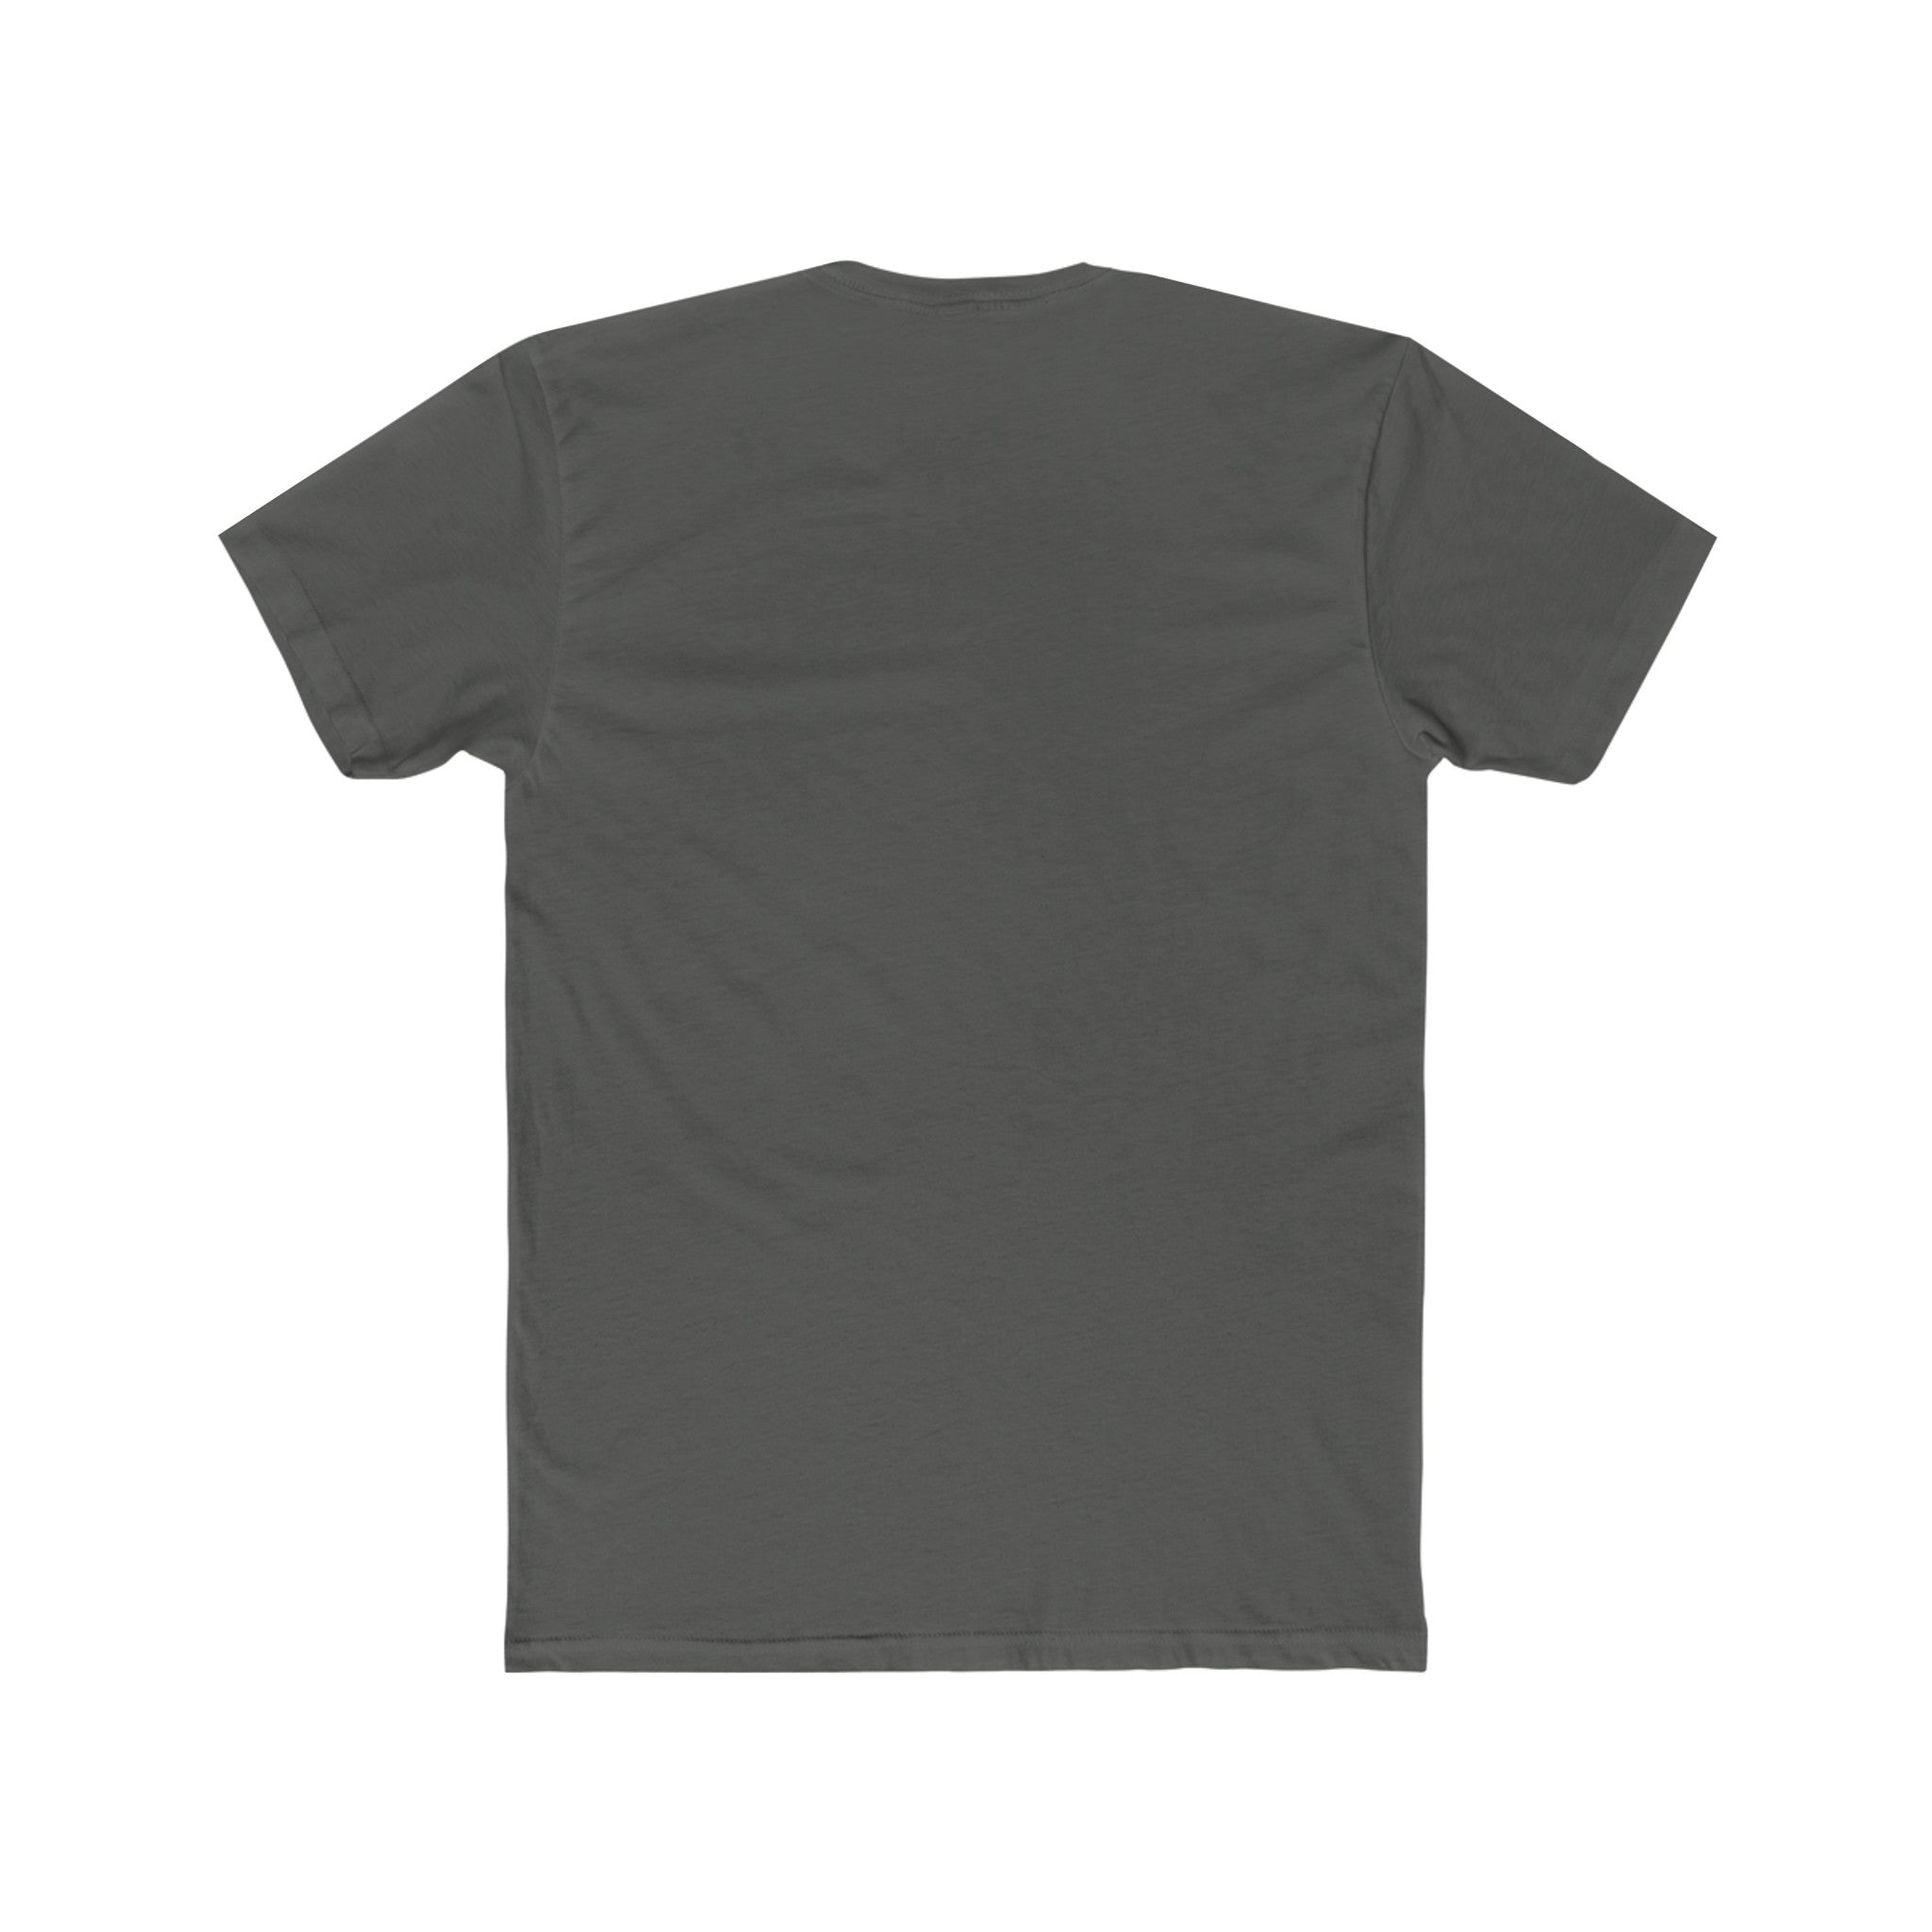 Vitruvian Lizzid Peeple Unisex T-Shirt